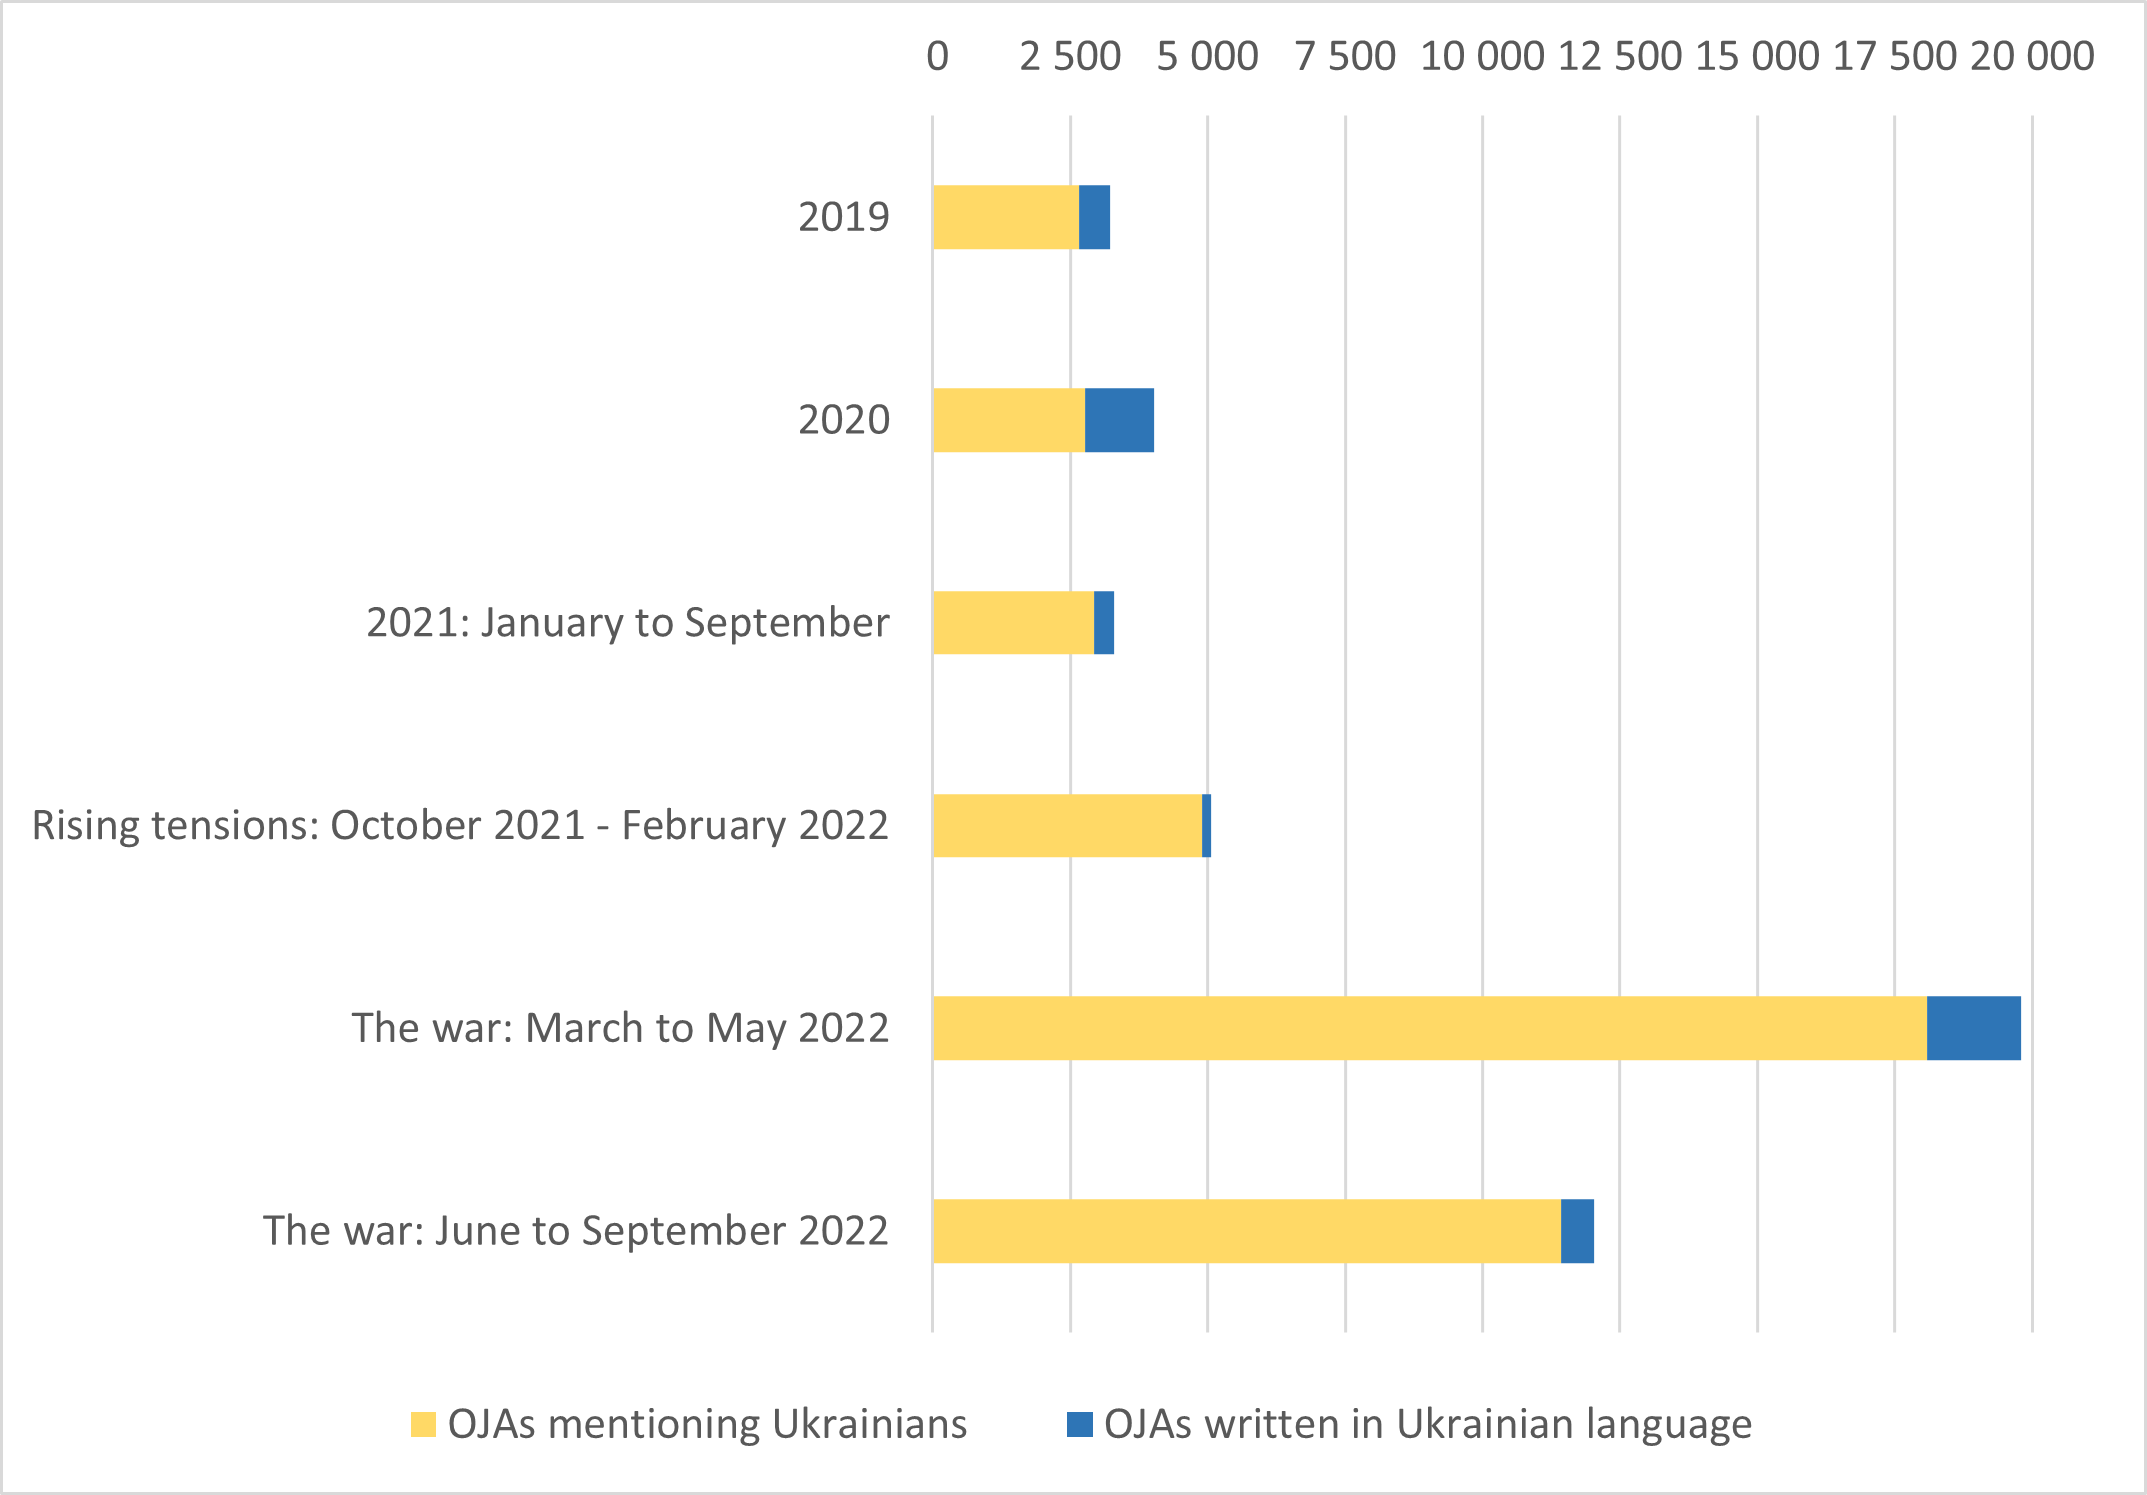 Number of OJAs targeting Ukrainians in the EU